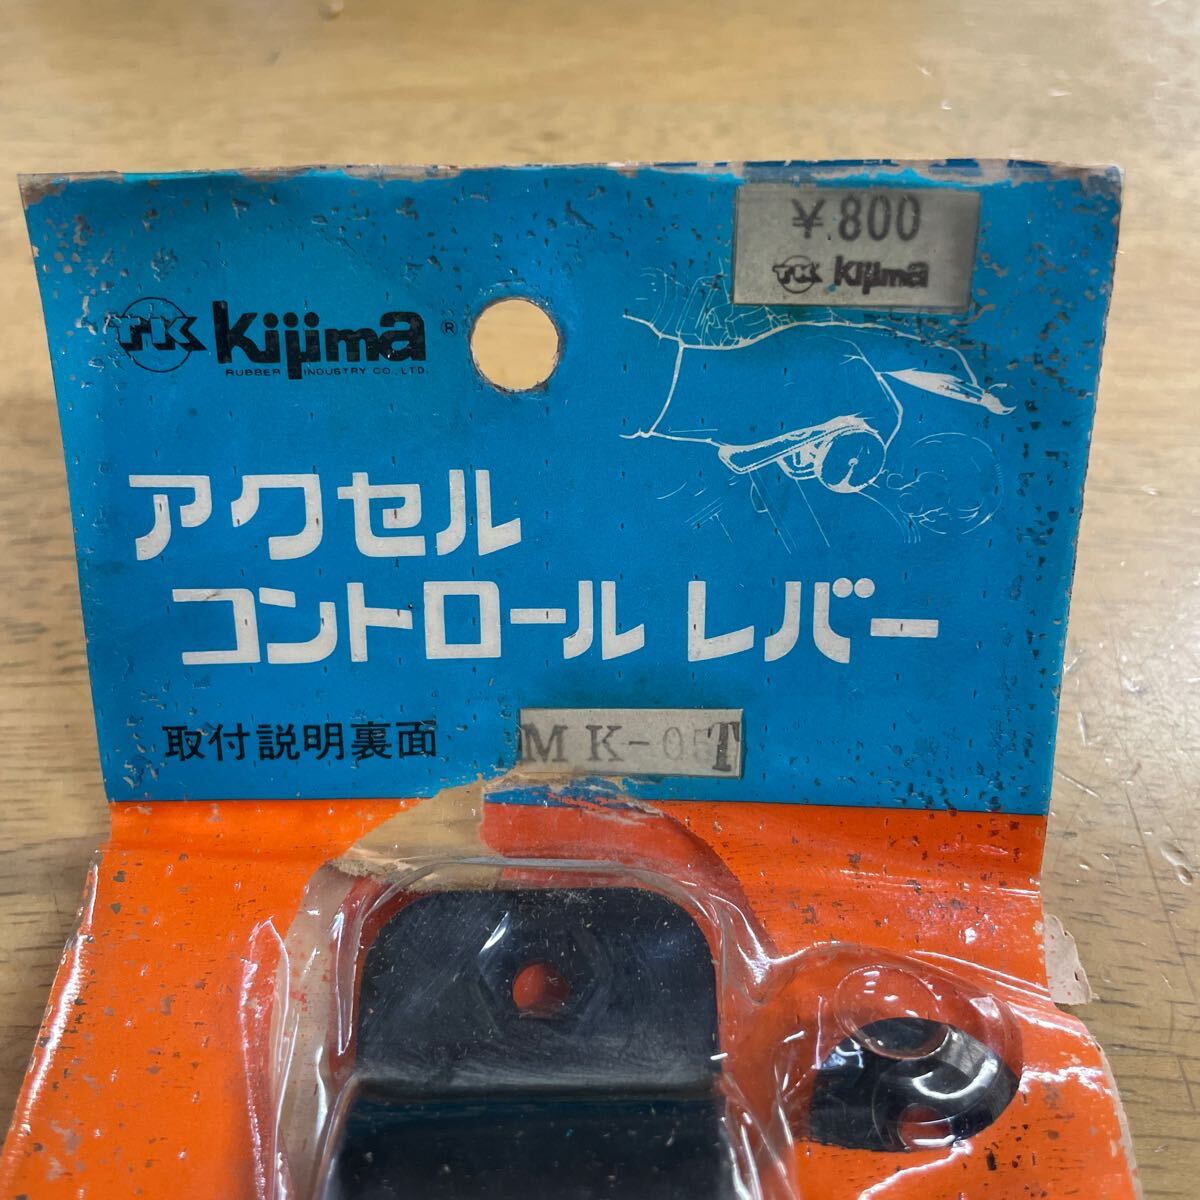 kijima アクセルコントロールレバー 未使用品 当時物 旧車 昭和レトロ ビンテージ アクセルアシスト スロットルアシストの画像7